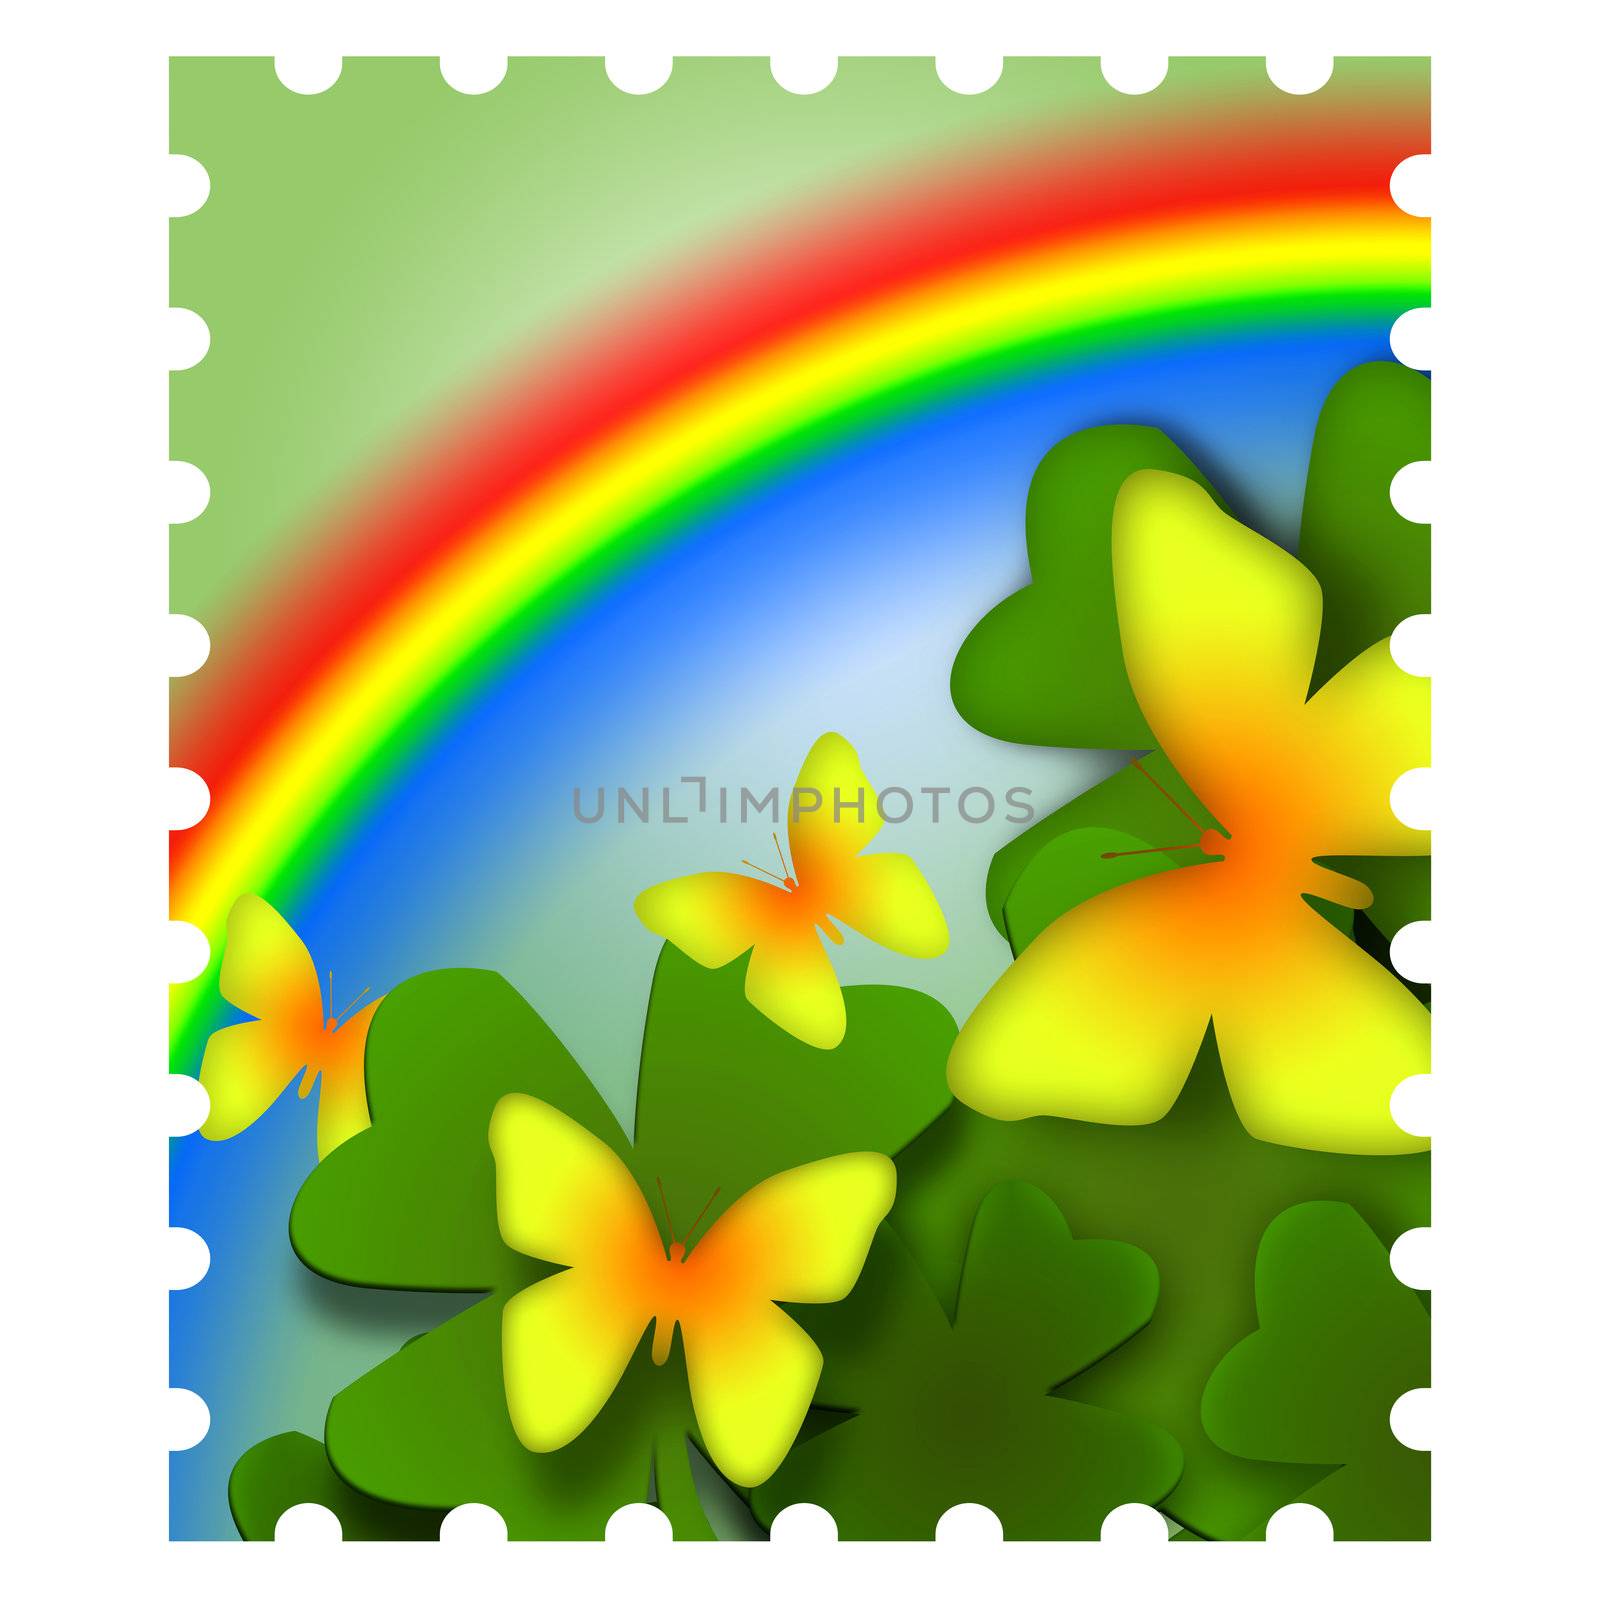 Spring butterflies and rainbow by Skovoroda